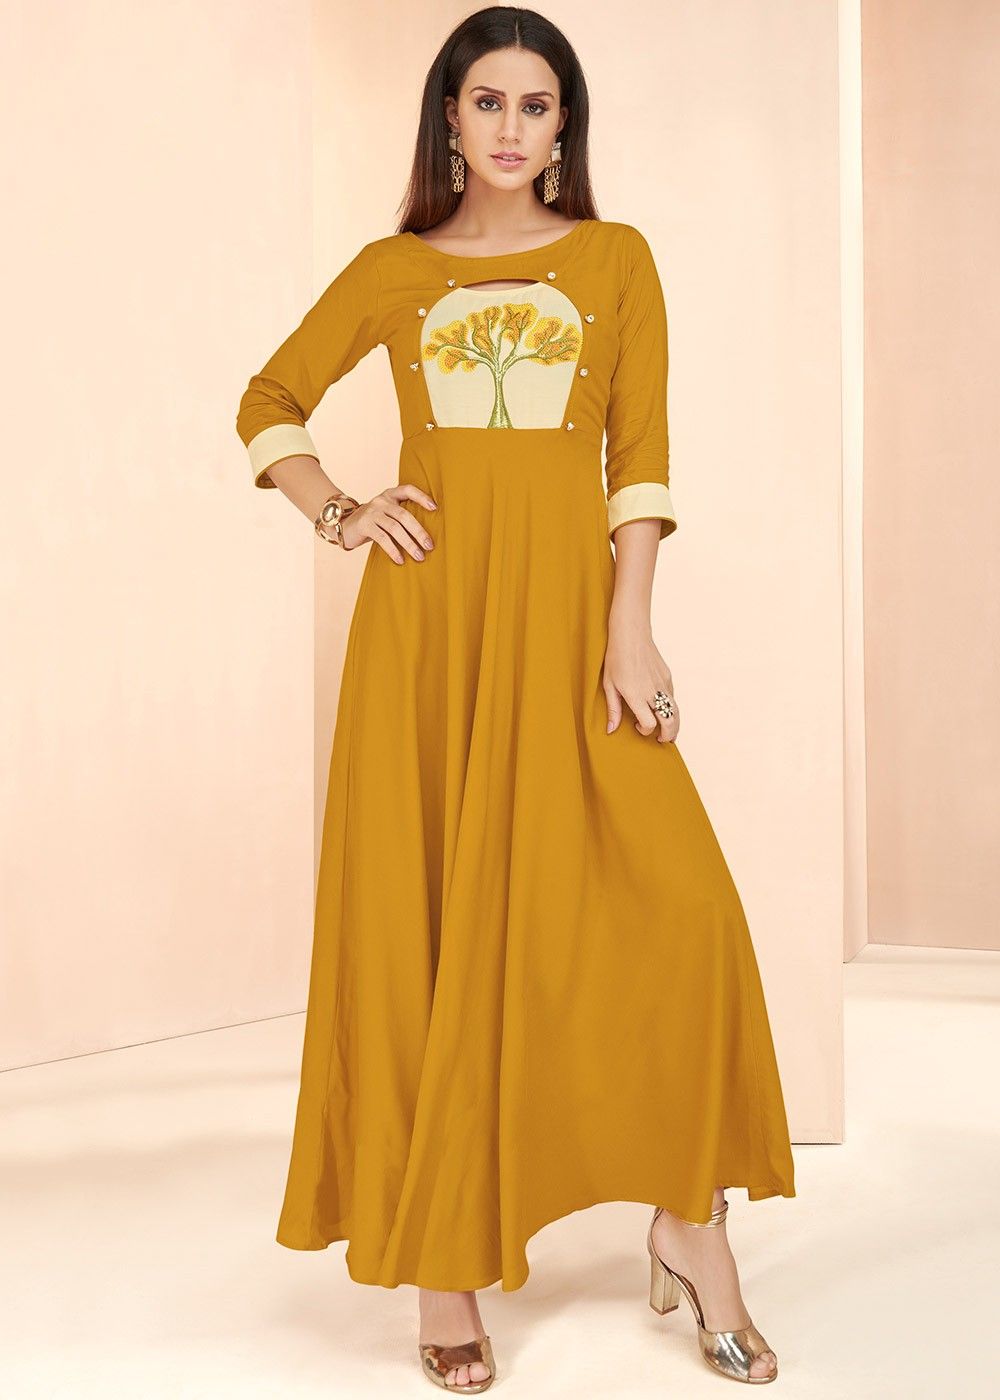 Yellow indo-western dress